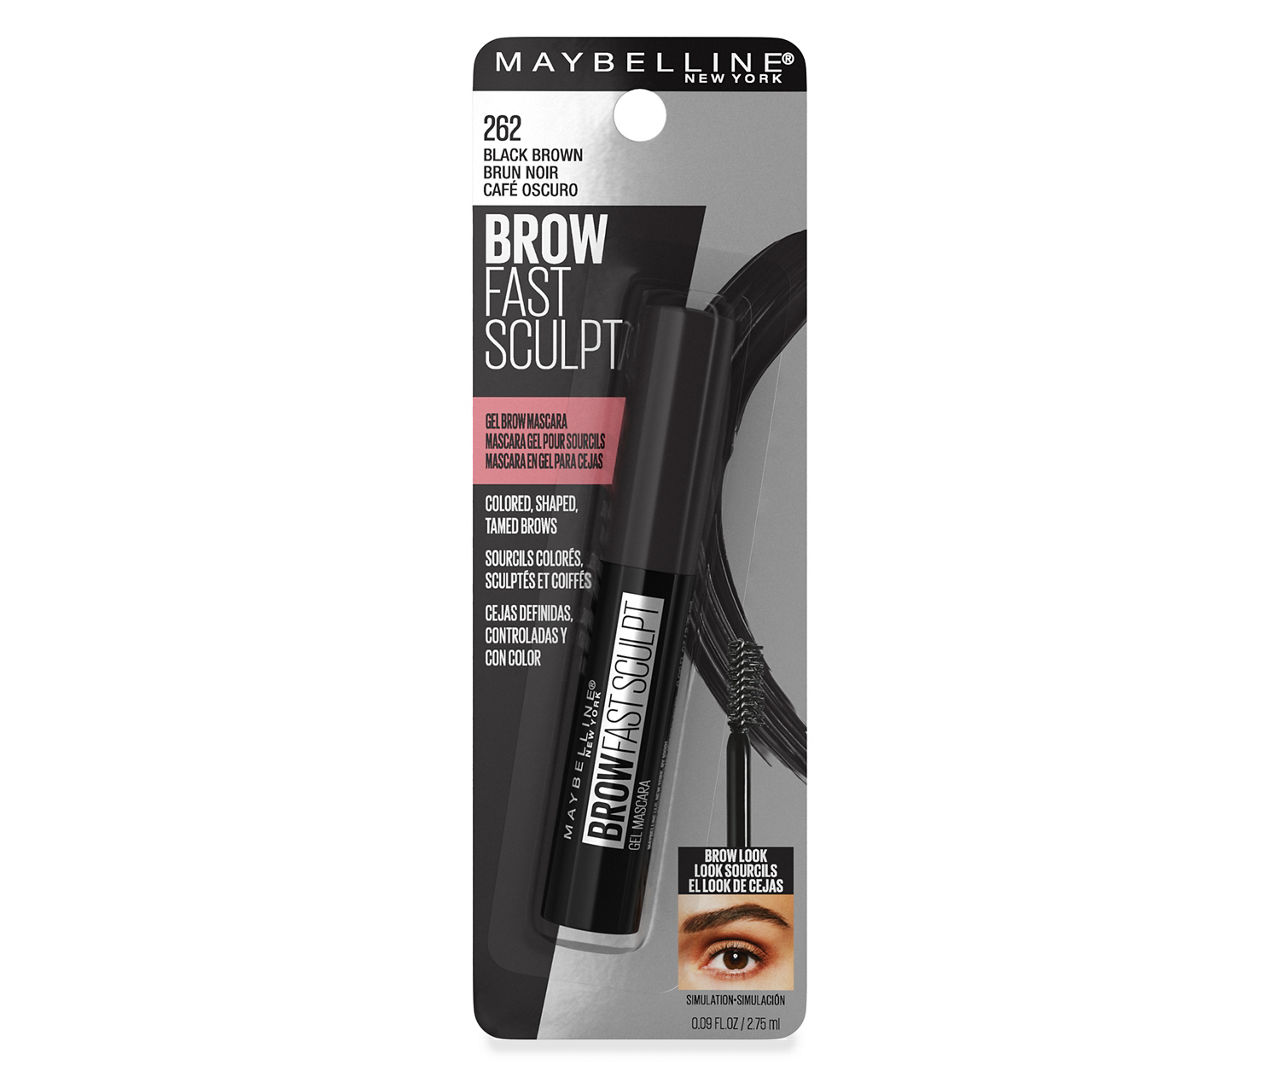 Maybelline Brow Fast Sculpt, Shapes Eyebrows, Eyebrow Mascara Makeup, Black Brown, 0.09 fl. oz.